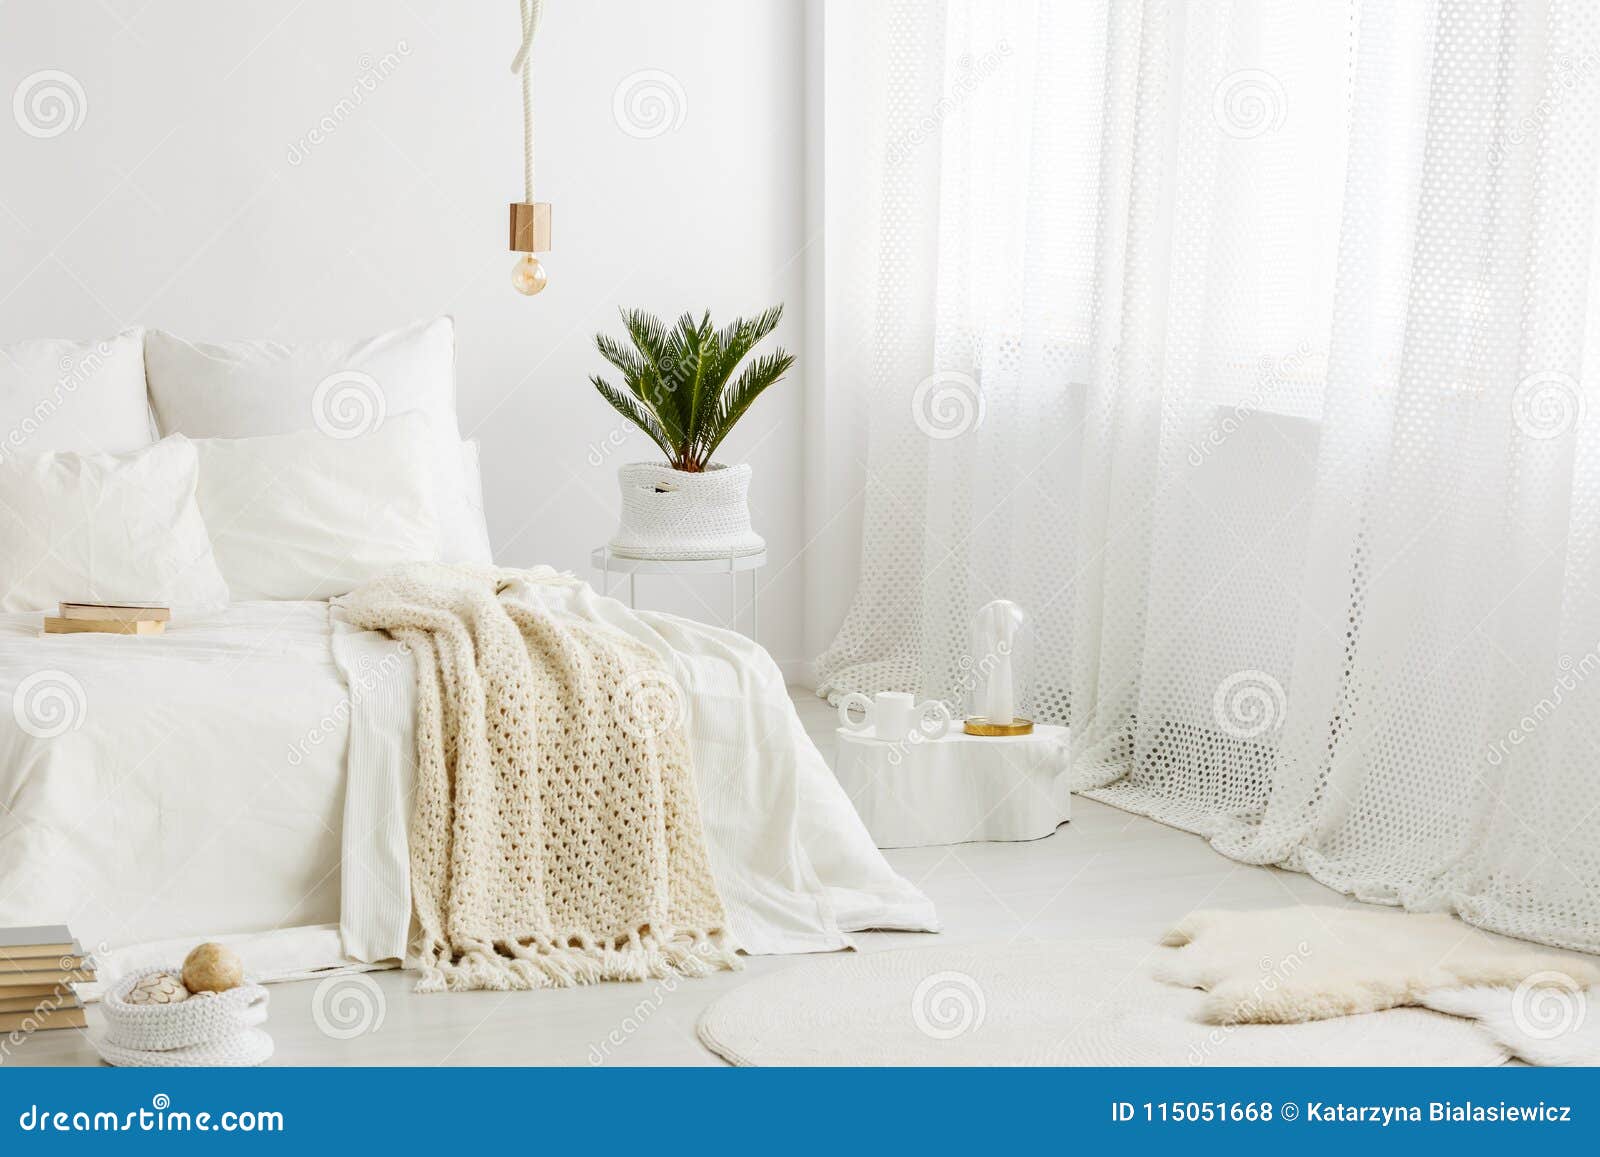 cozy bedroom with white bedding